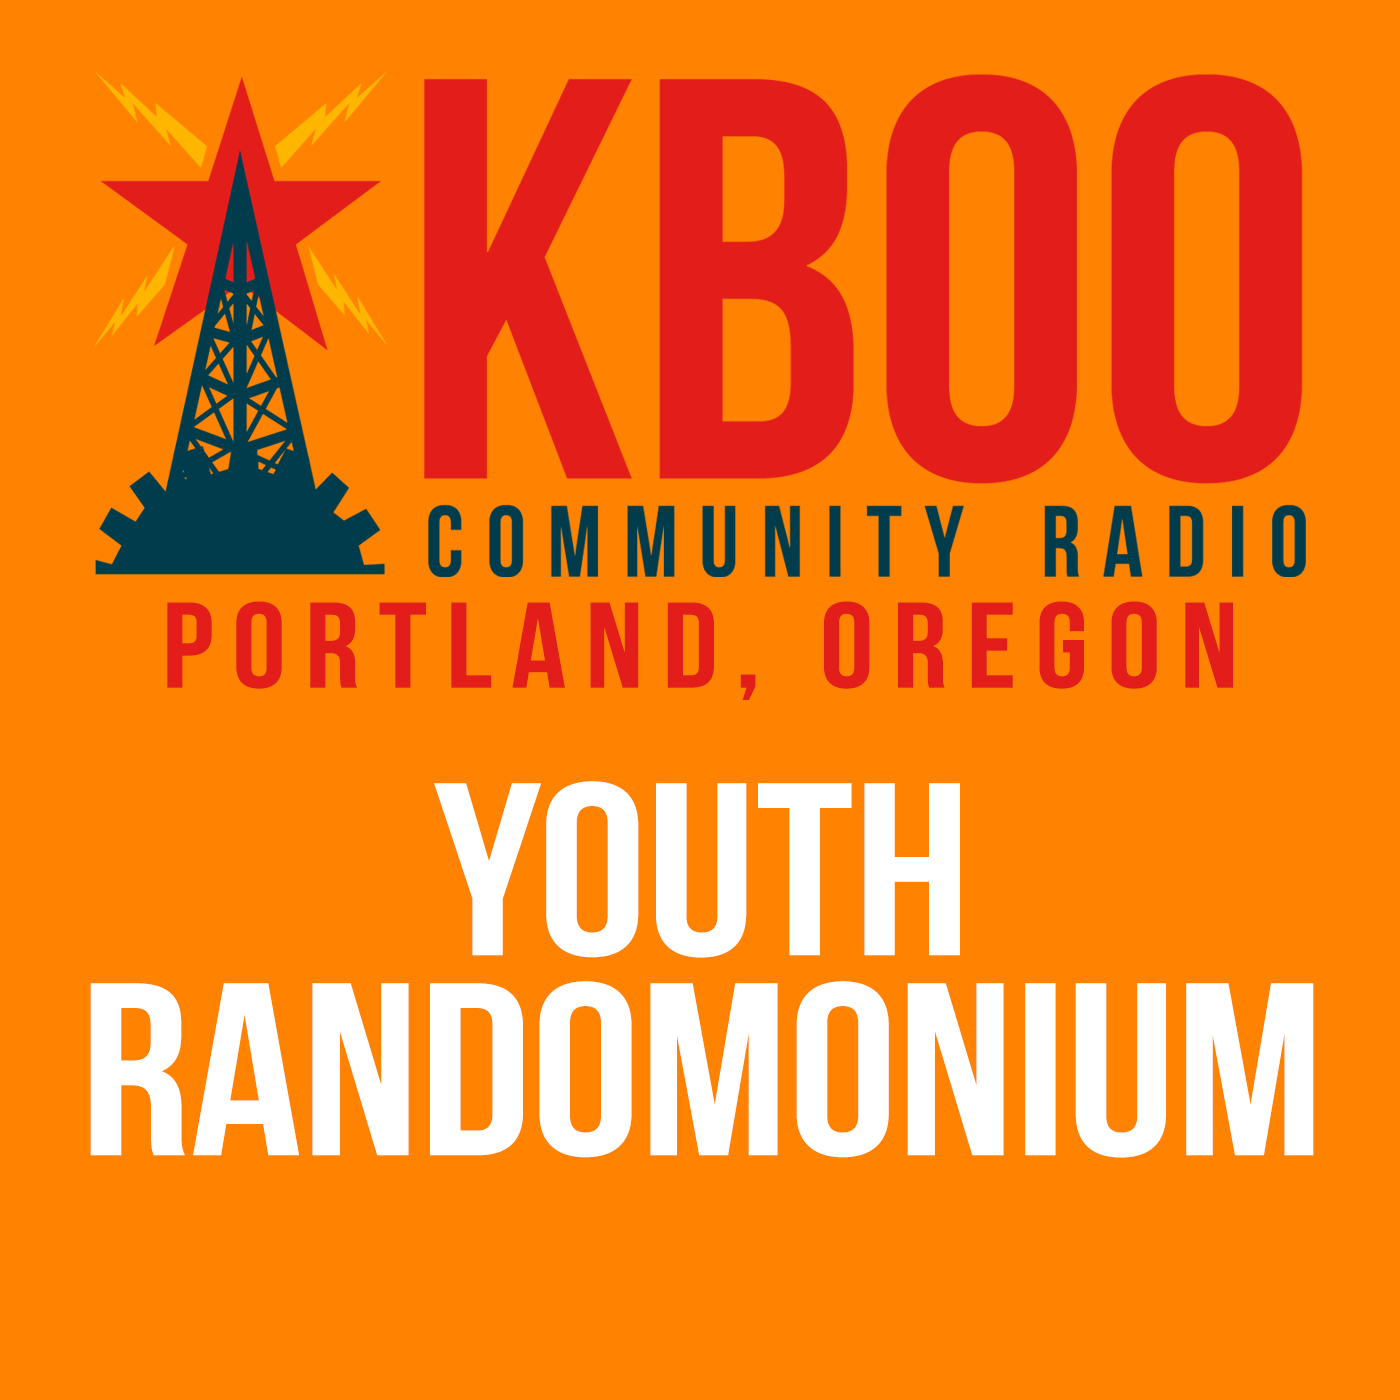 Youth Randomonium on 07/07/23